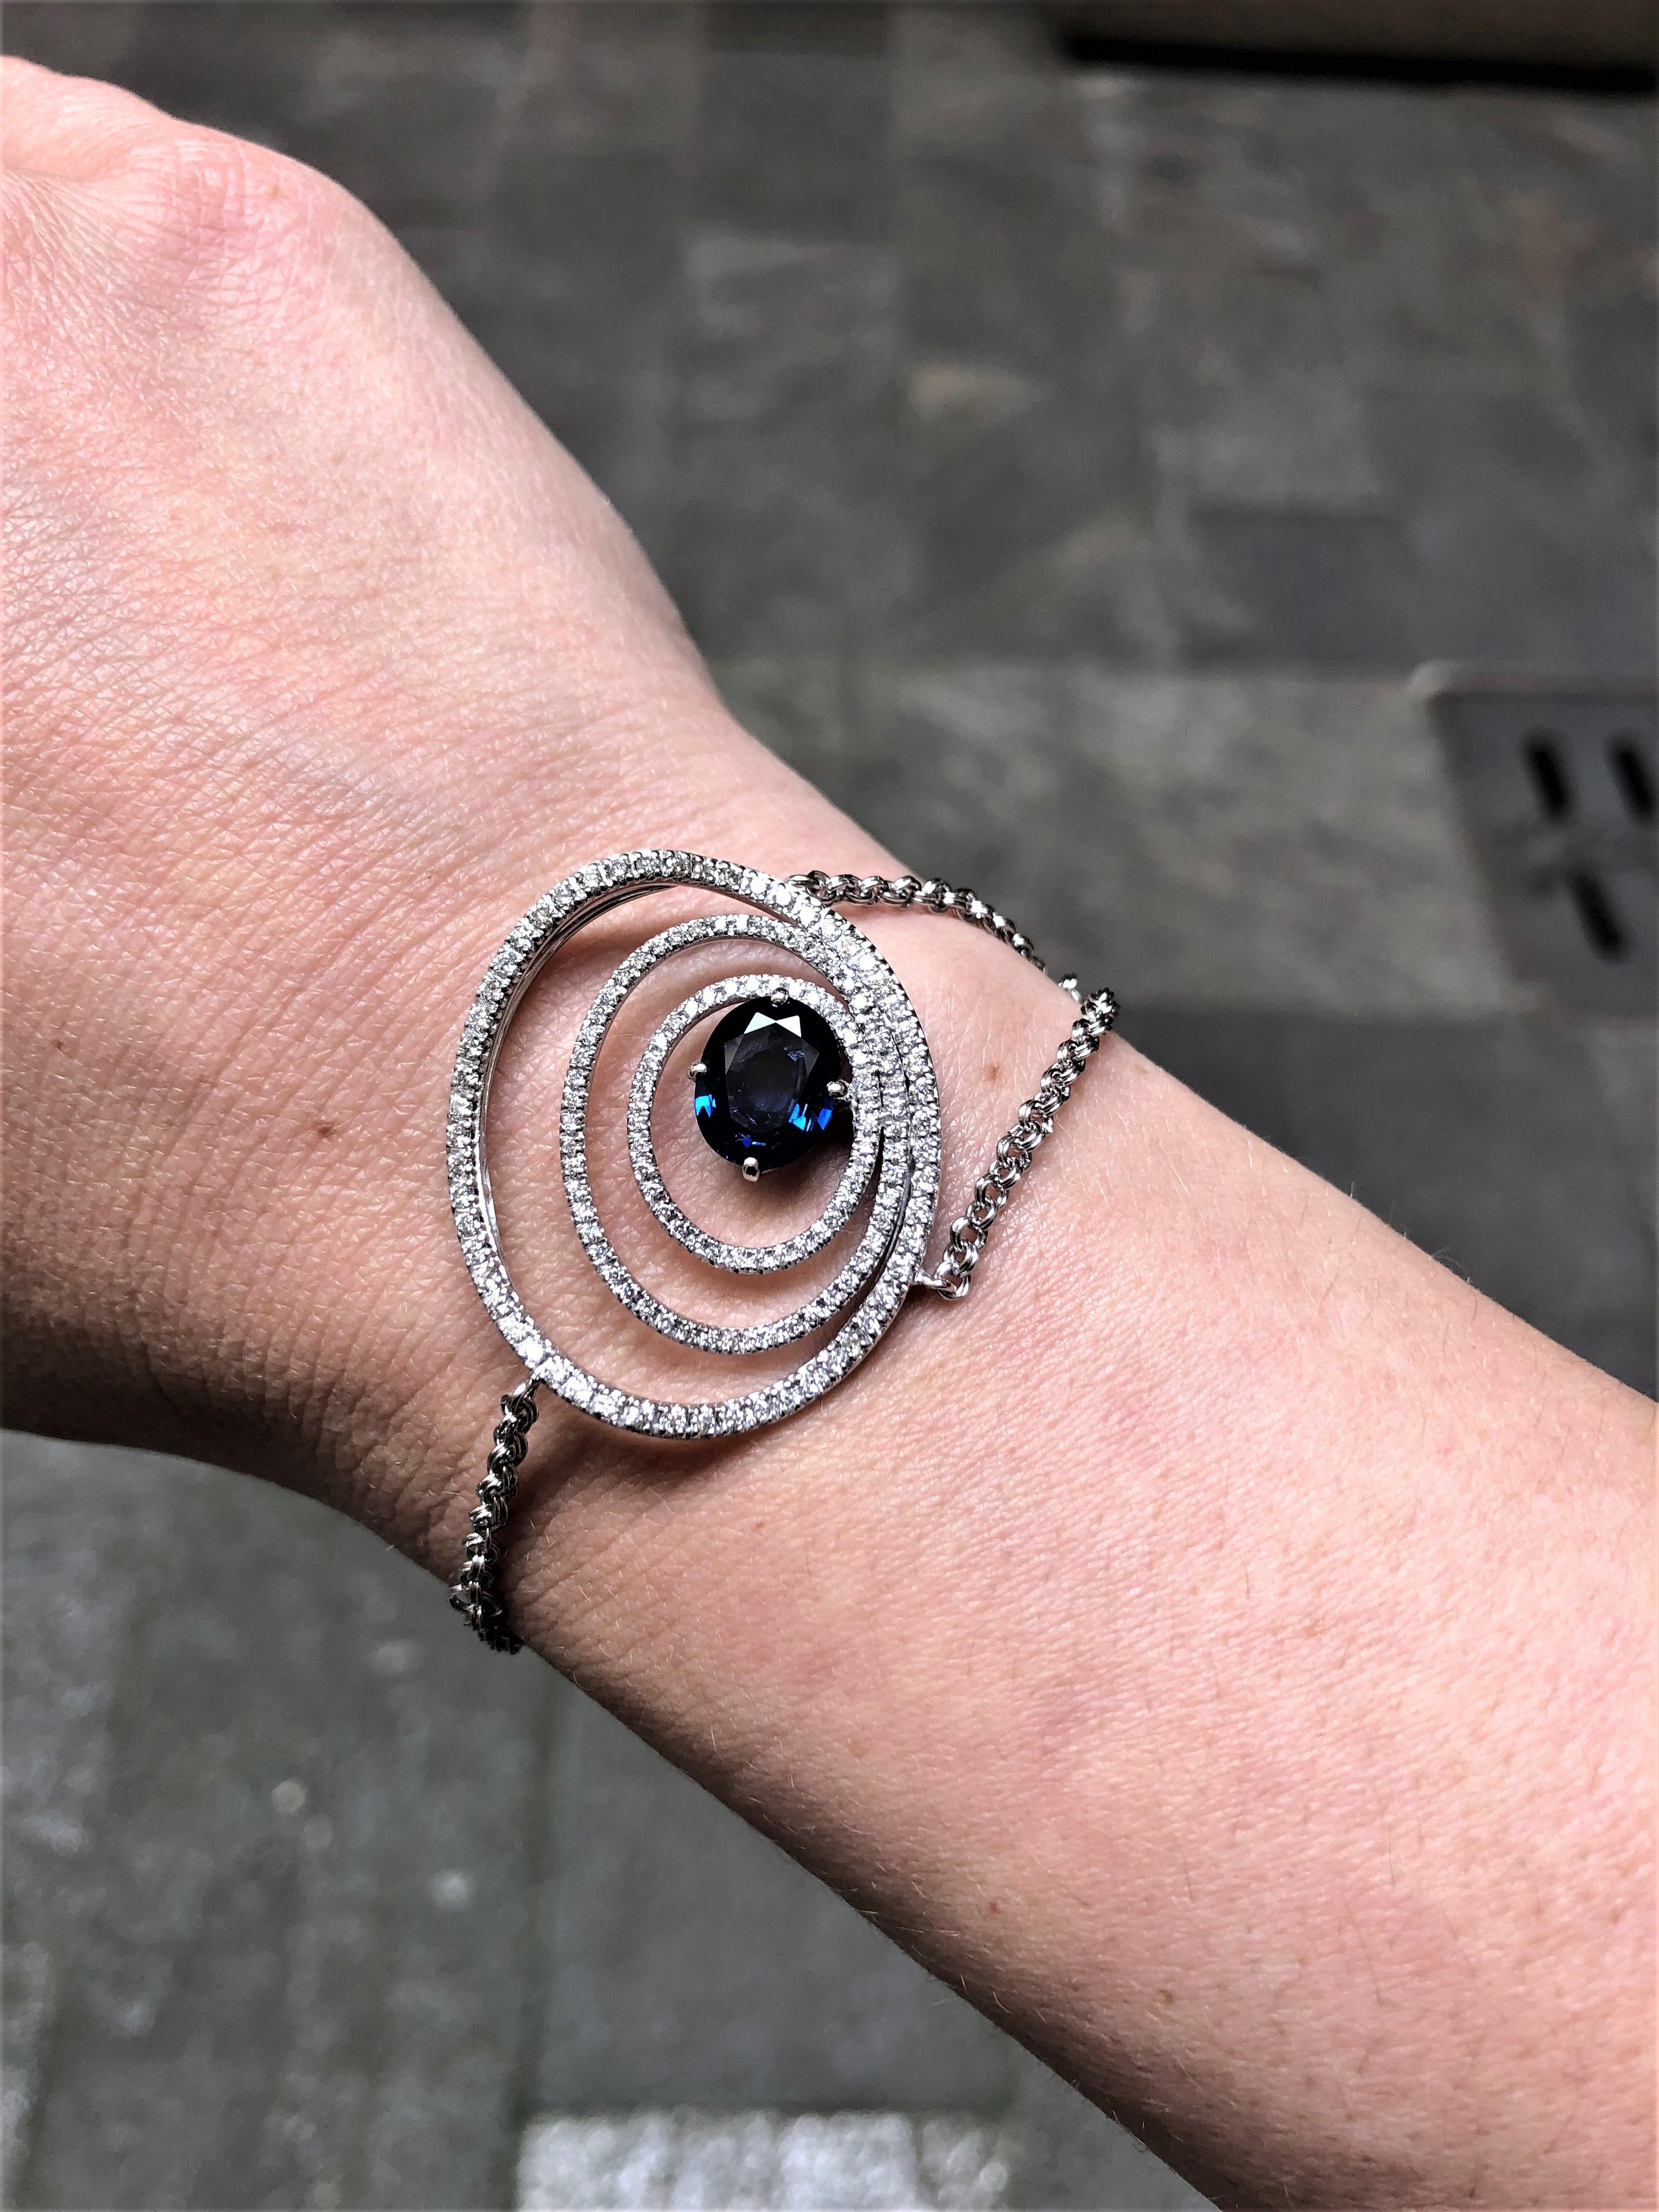 Beatrice Barzaghi 5 carat Aquamarine Diamond  Gold Unique Clasp Cosmic Bracelet  For Sale 6